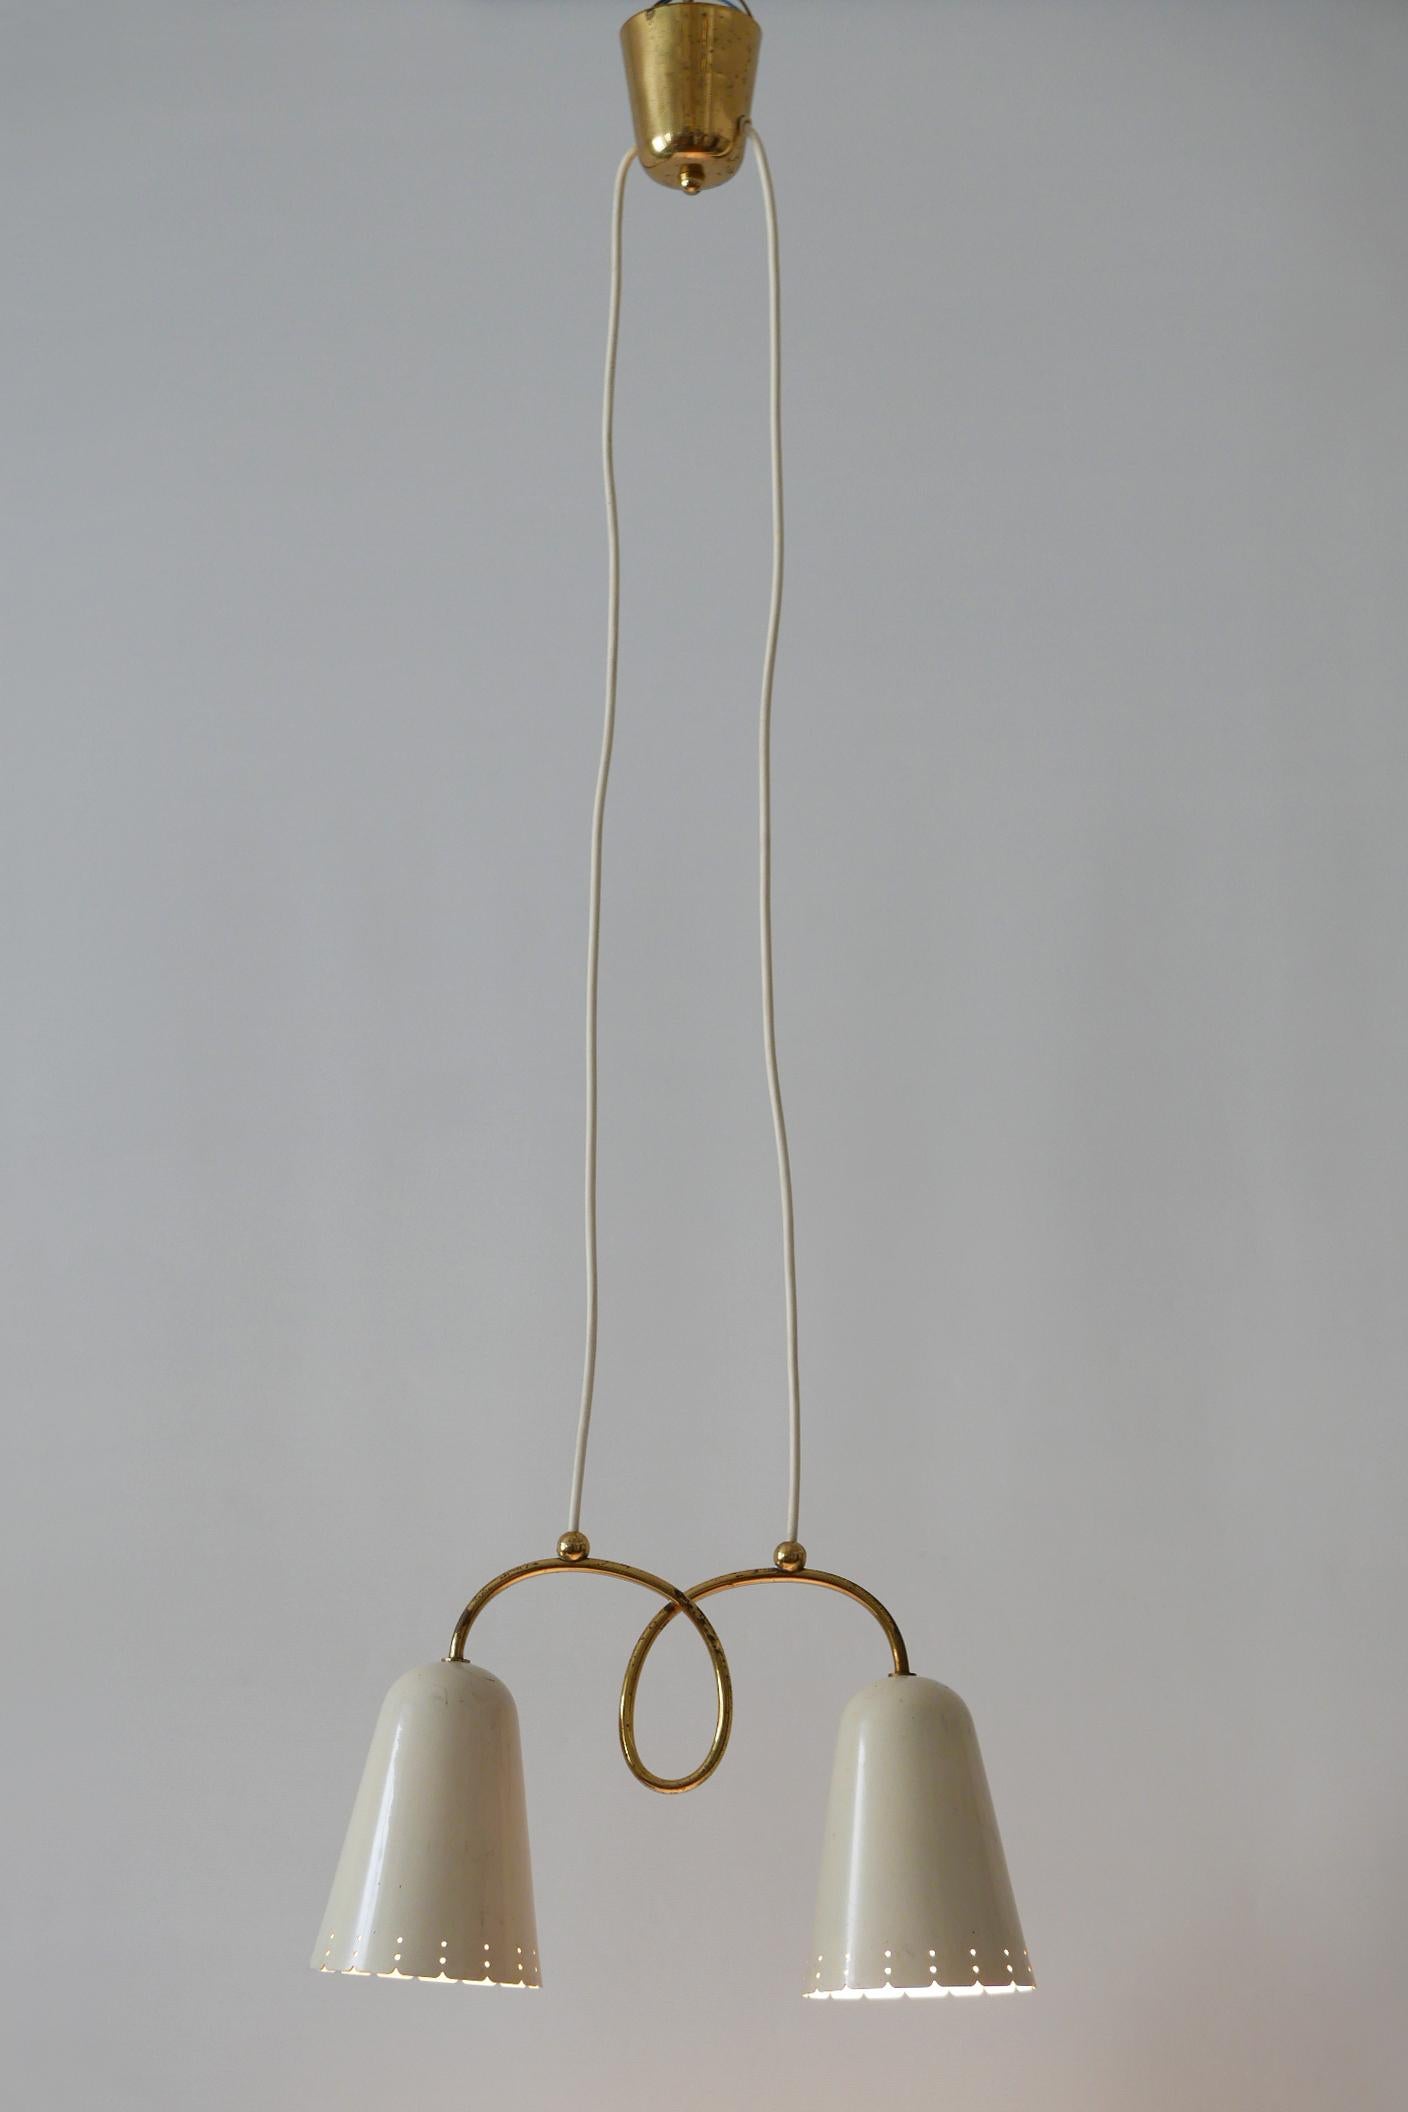 Rare Mid-Century Modern Double Head Pendant Lamp or Hanging Light 1950s, Germany 6